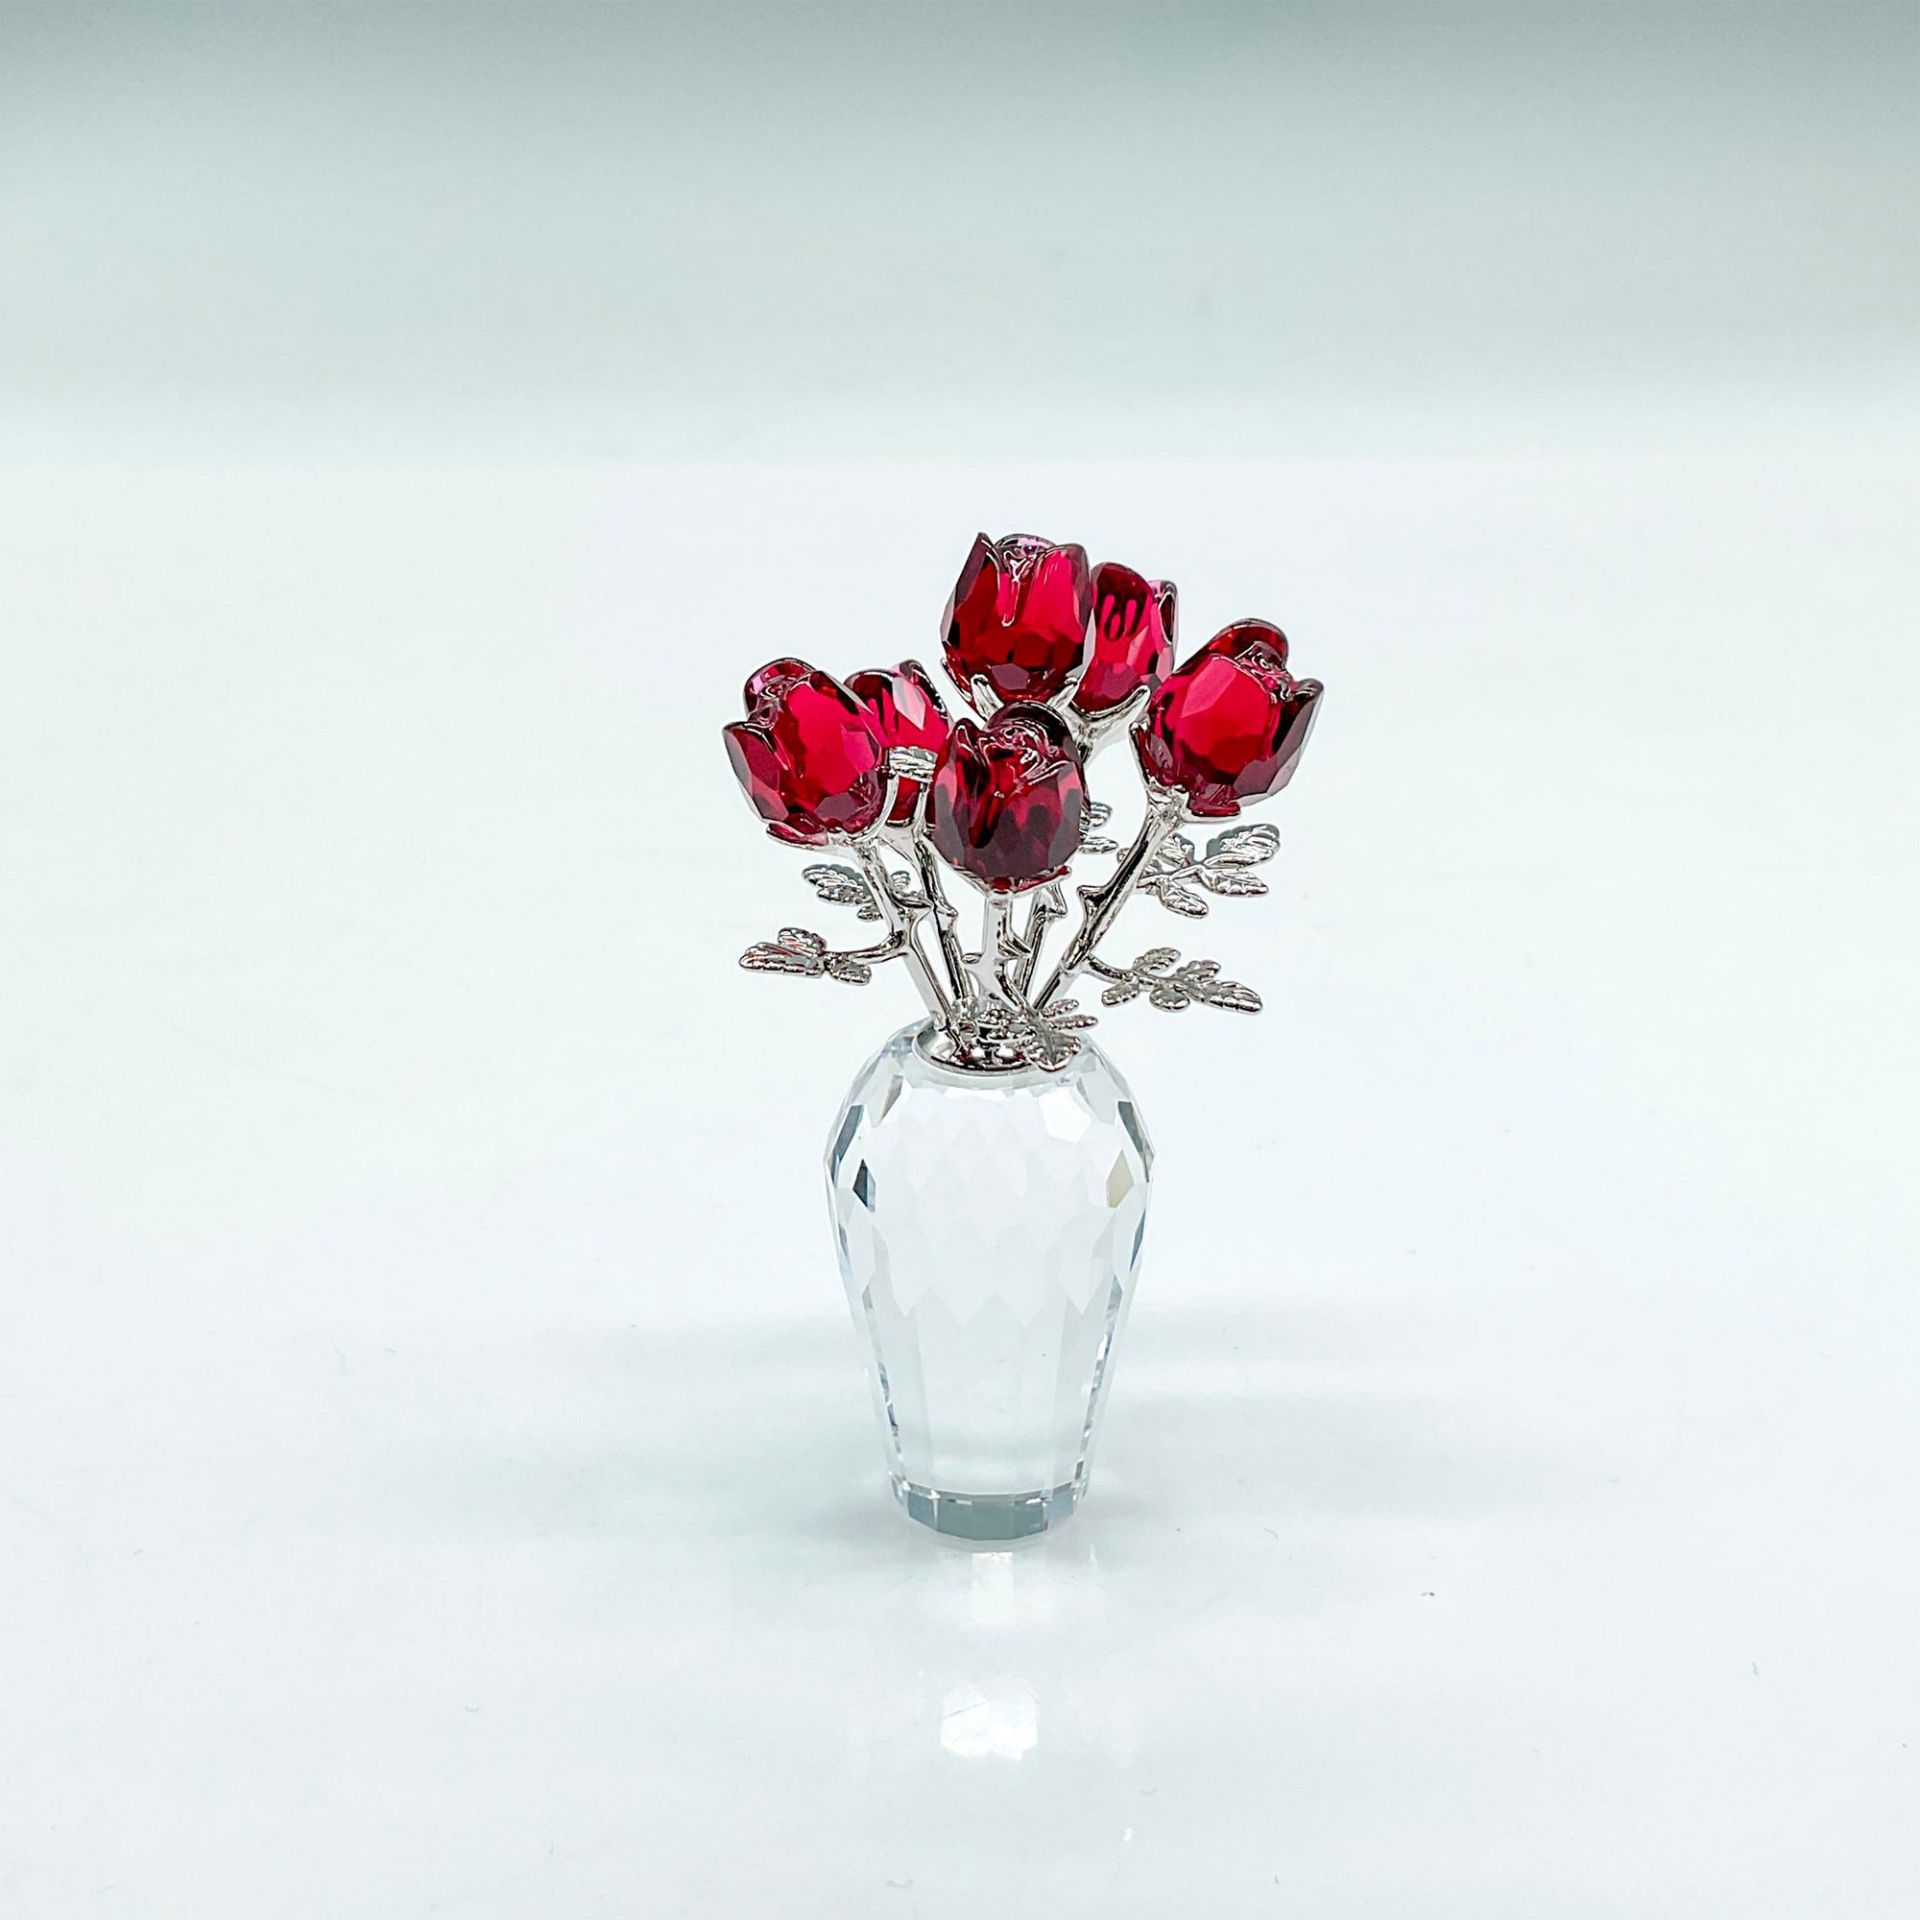 Swarovski Crystal Figurine, Red Roses with Silver Stems